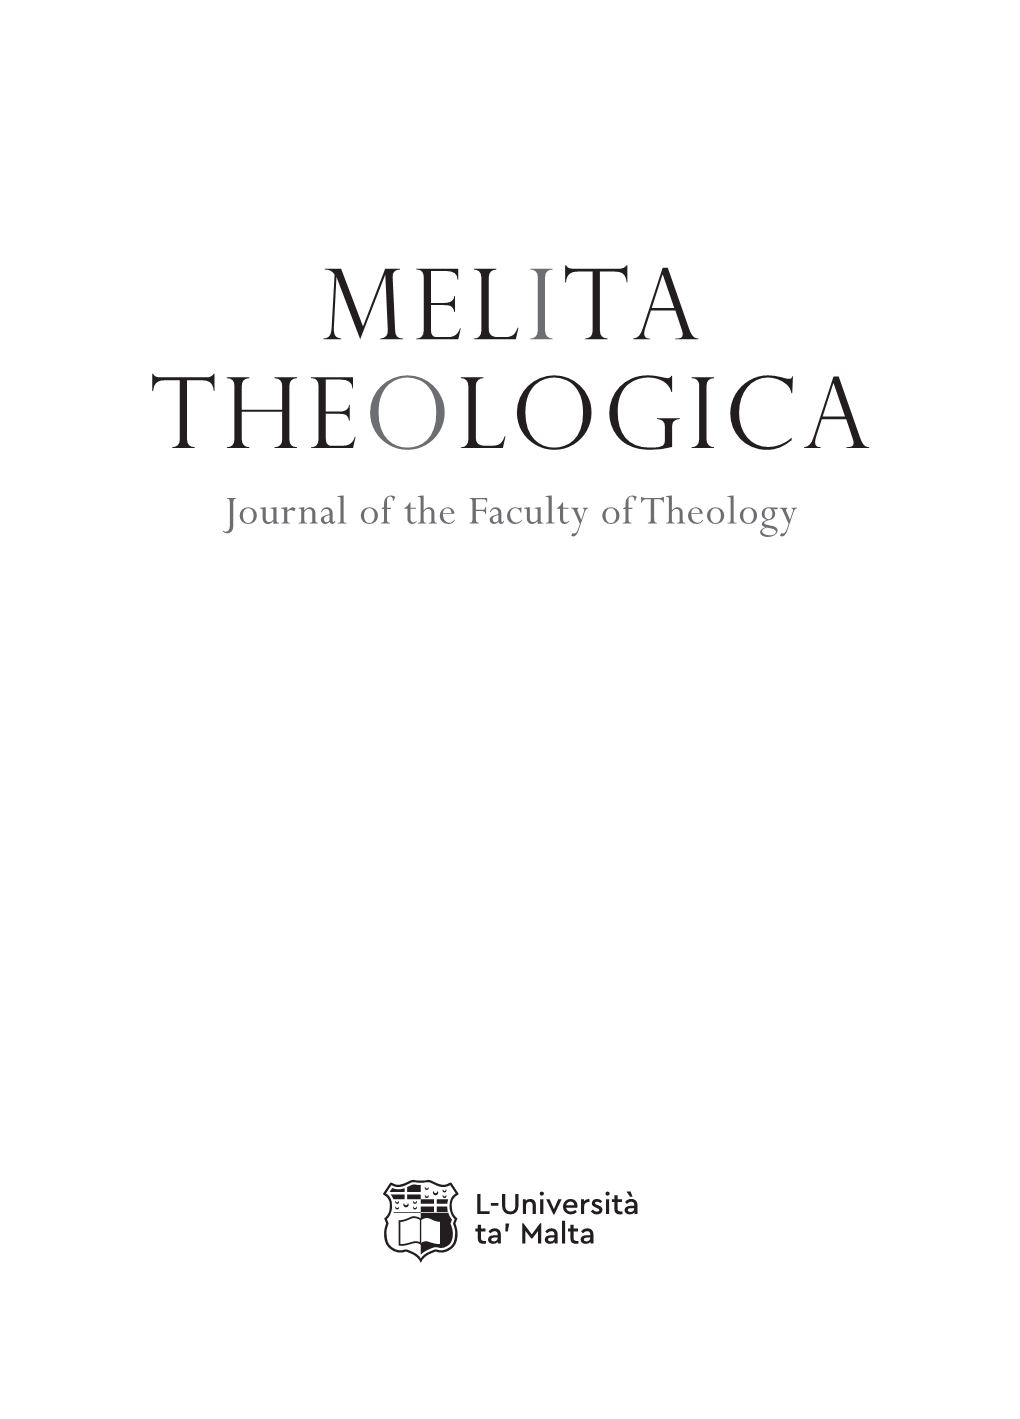 Melita Theologica Journal of the Faculty of Theology ISSN: 1012-9588 Copyright Melita Theologica Press: Best Print, Qrendi, Malta